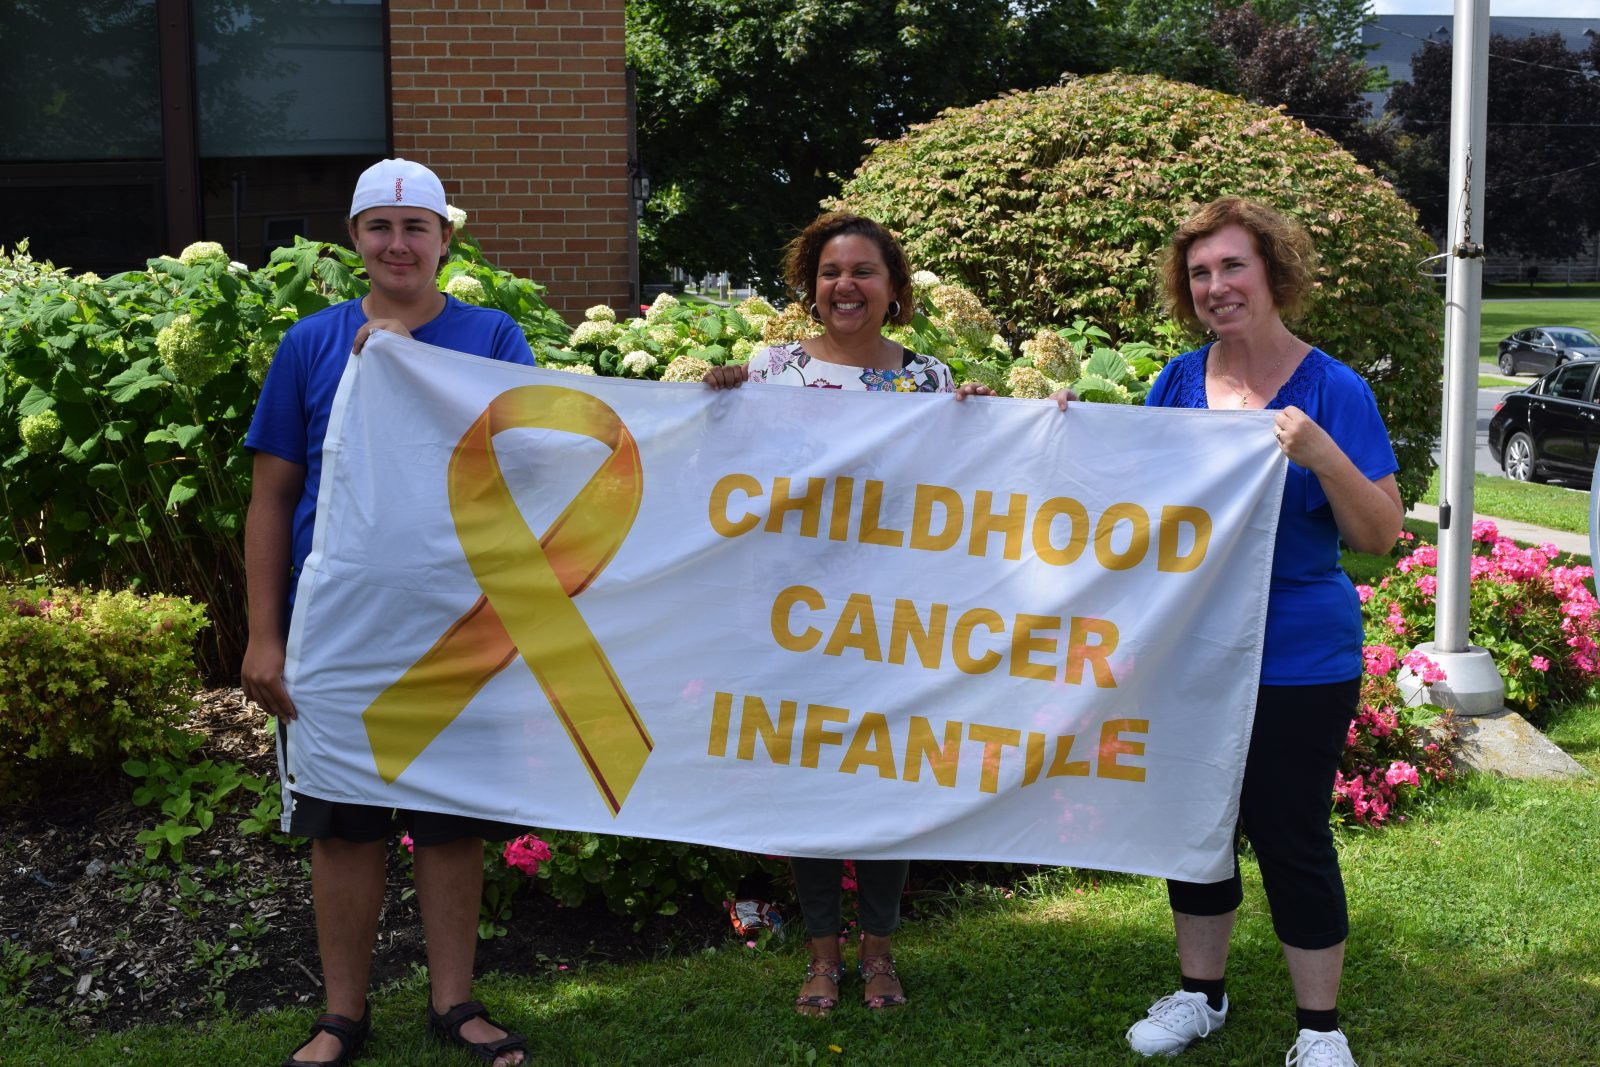 Raising awareness for childhood cancer